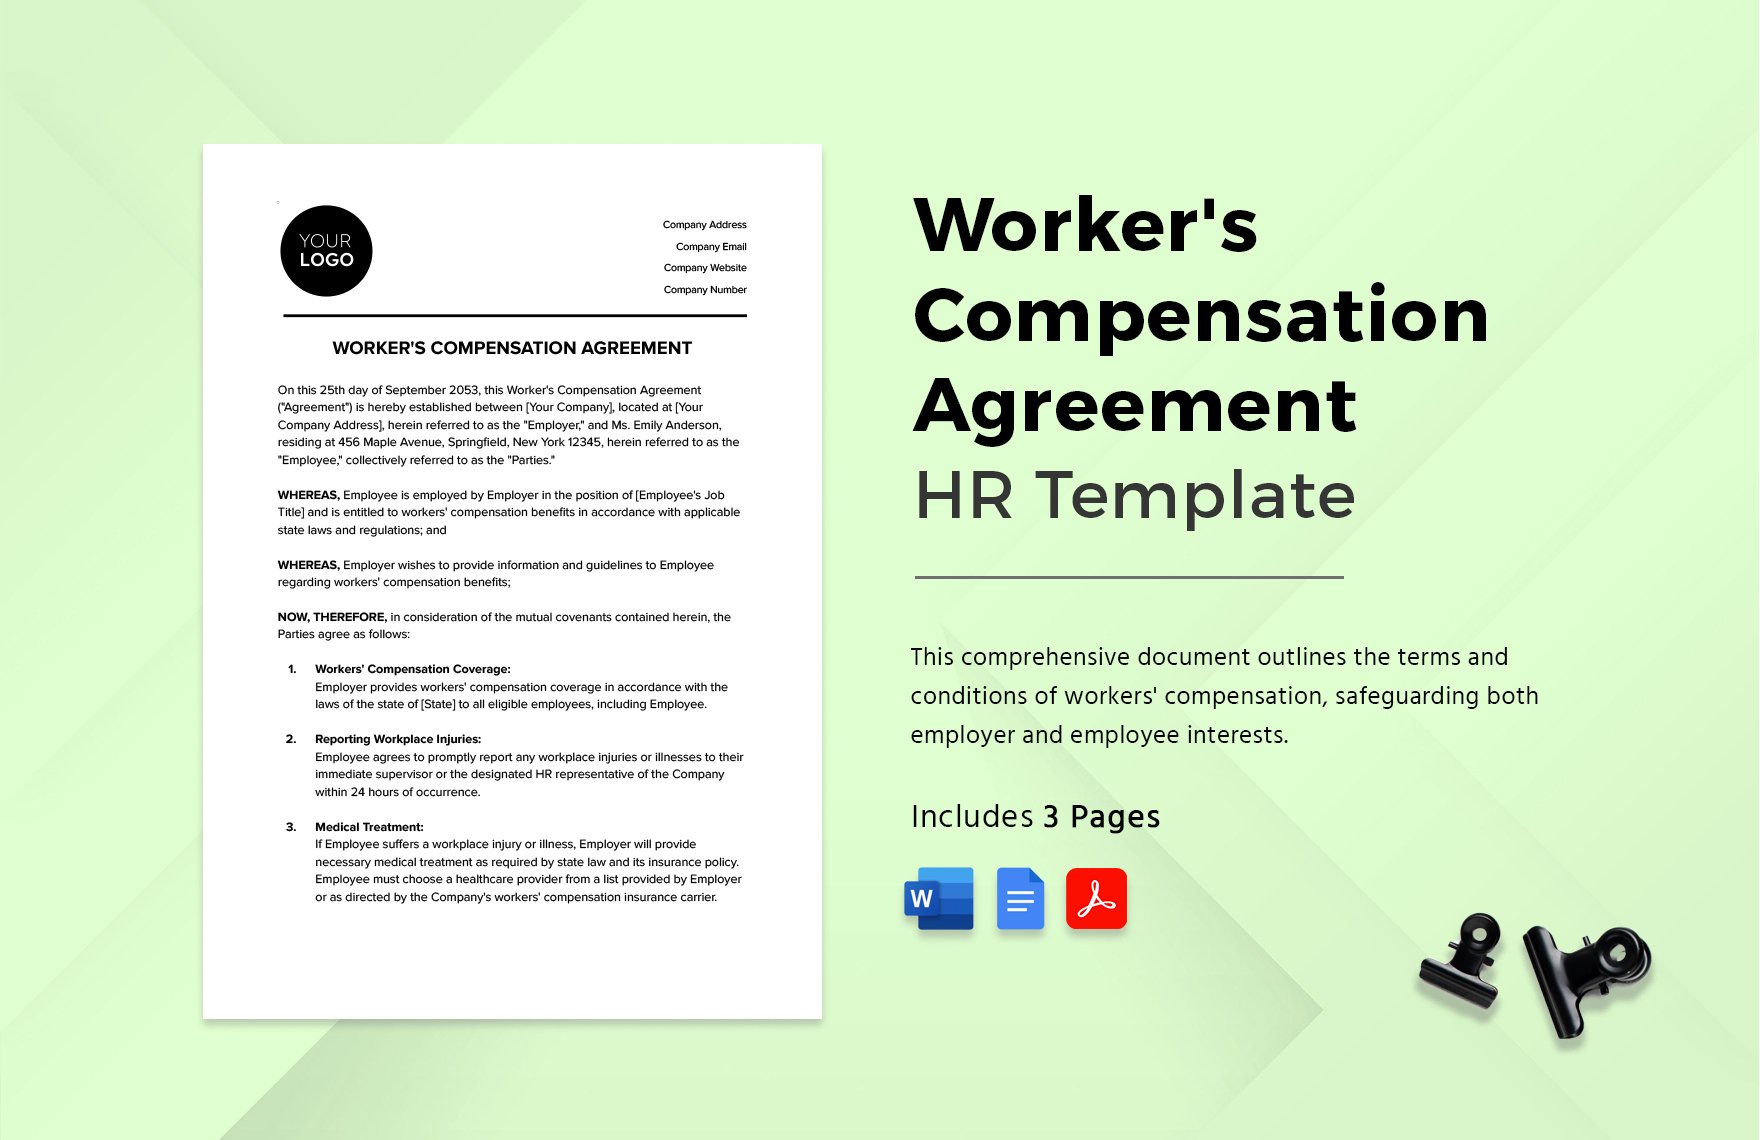 Worker's Compensation Agreement HR Template